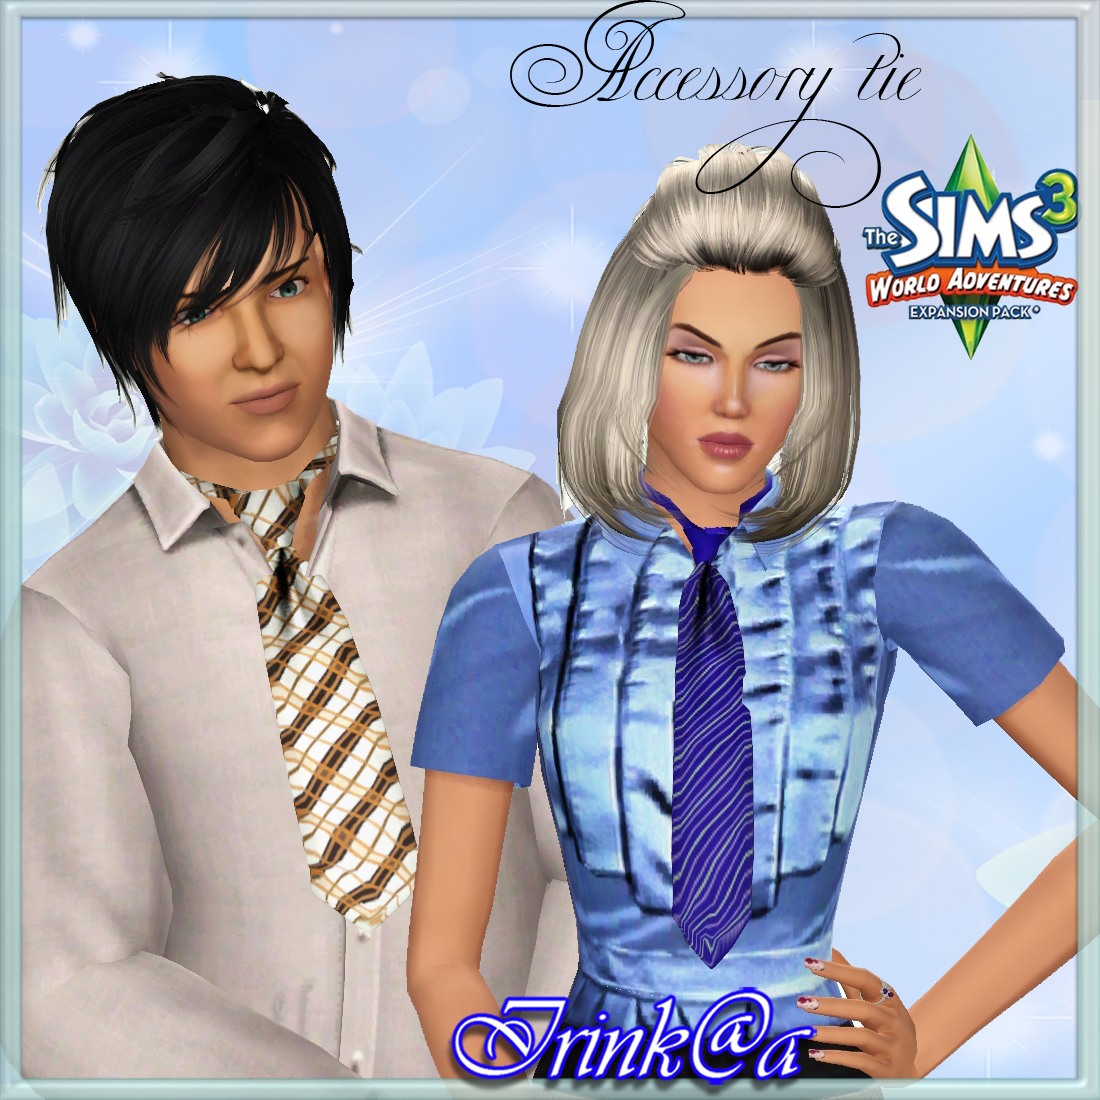 Sims 4 Tie